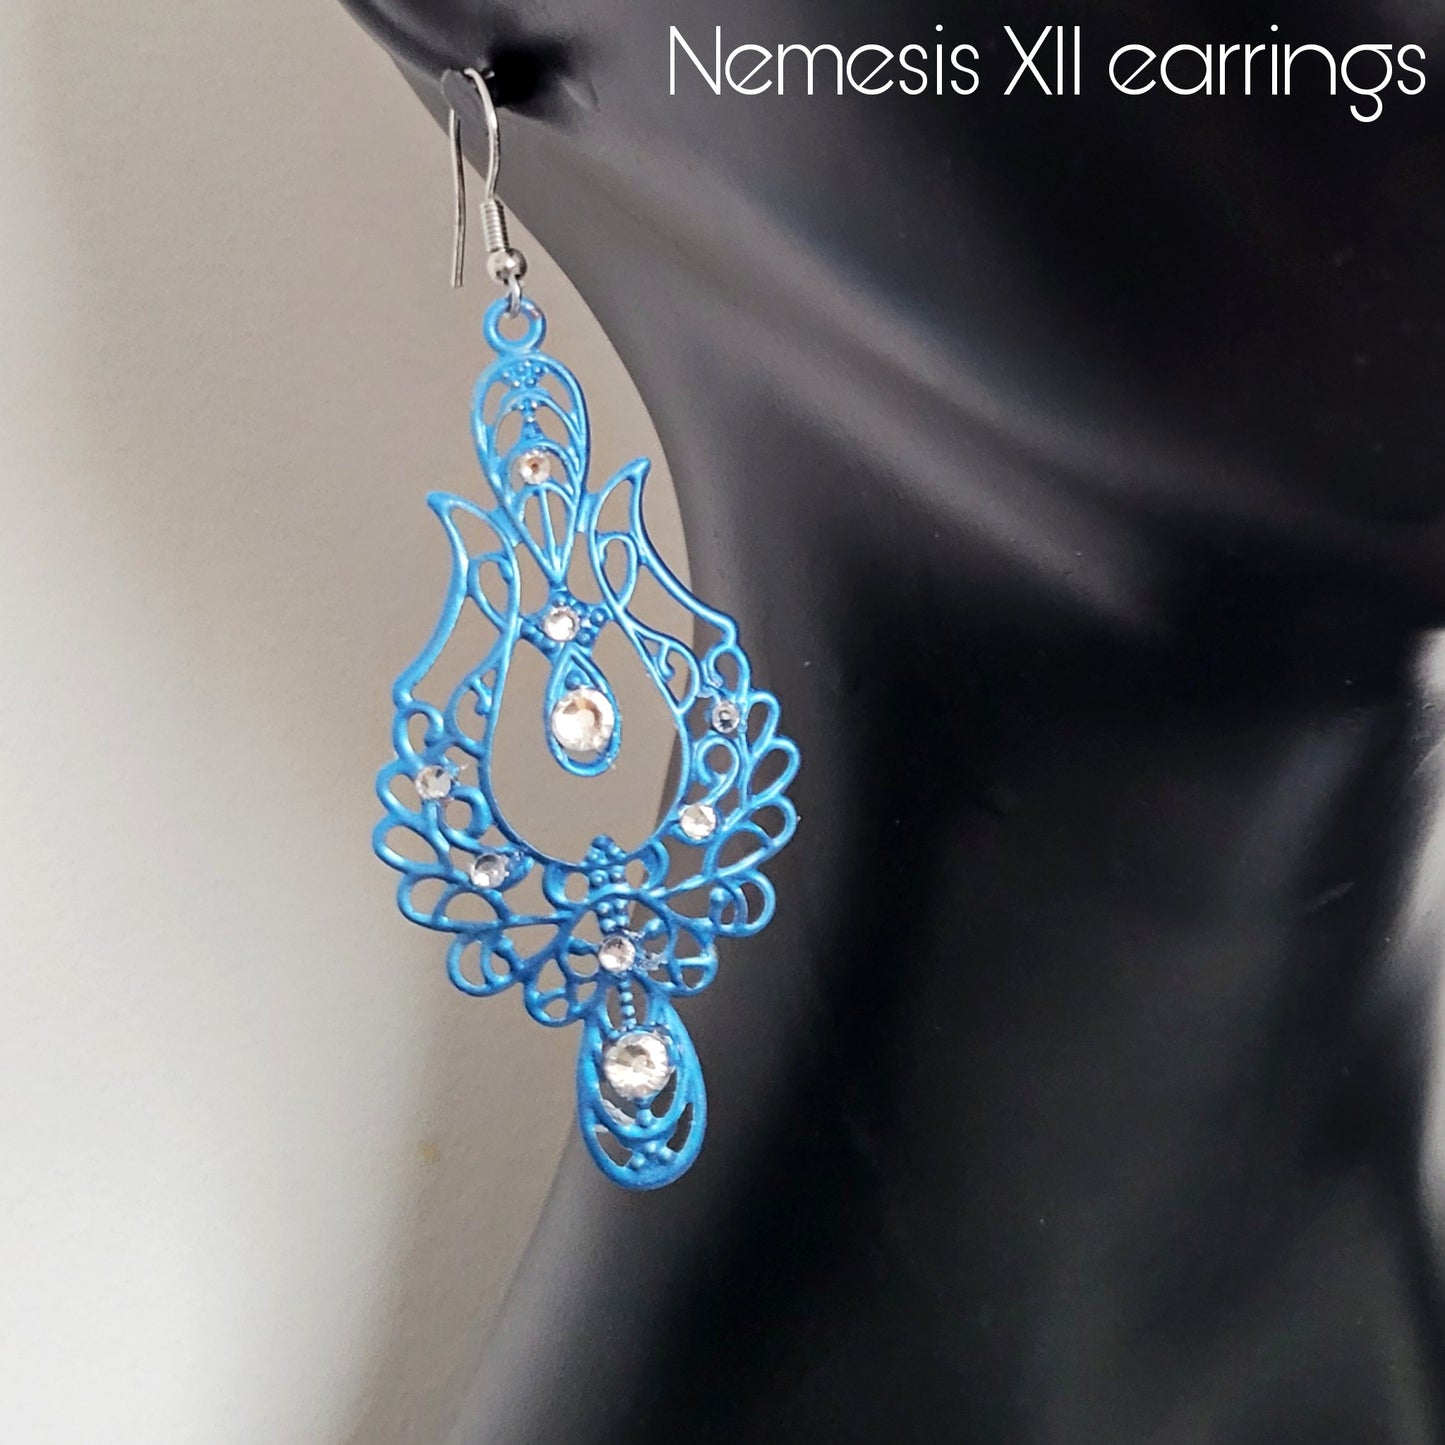 Deusa ex Machina collection: The Nemesis earrings